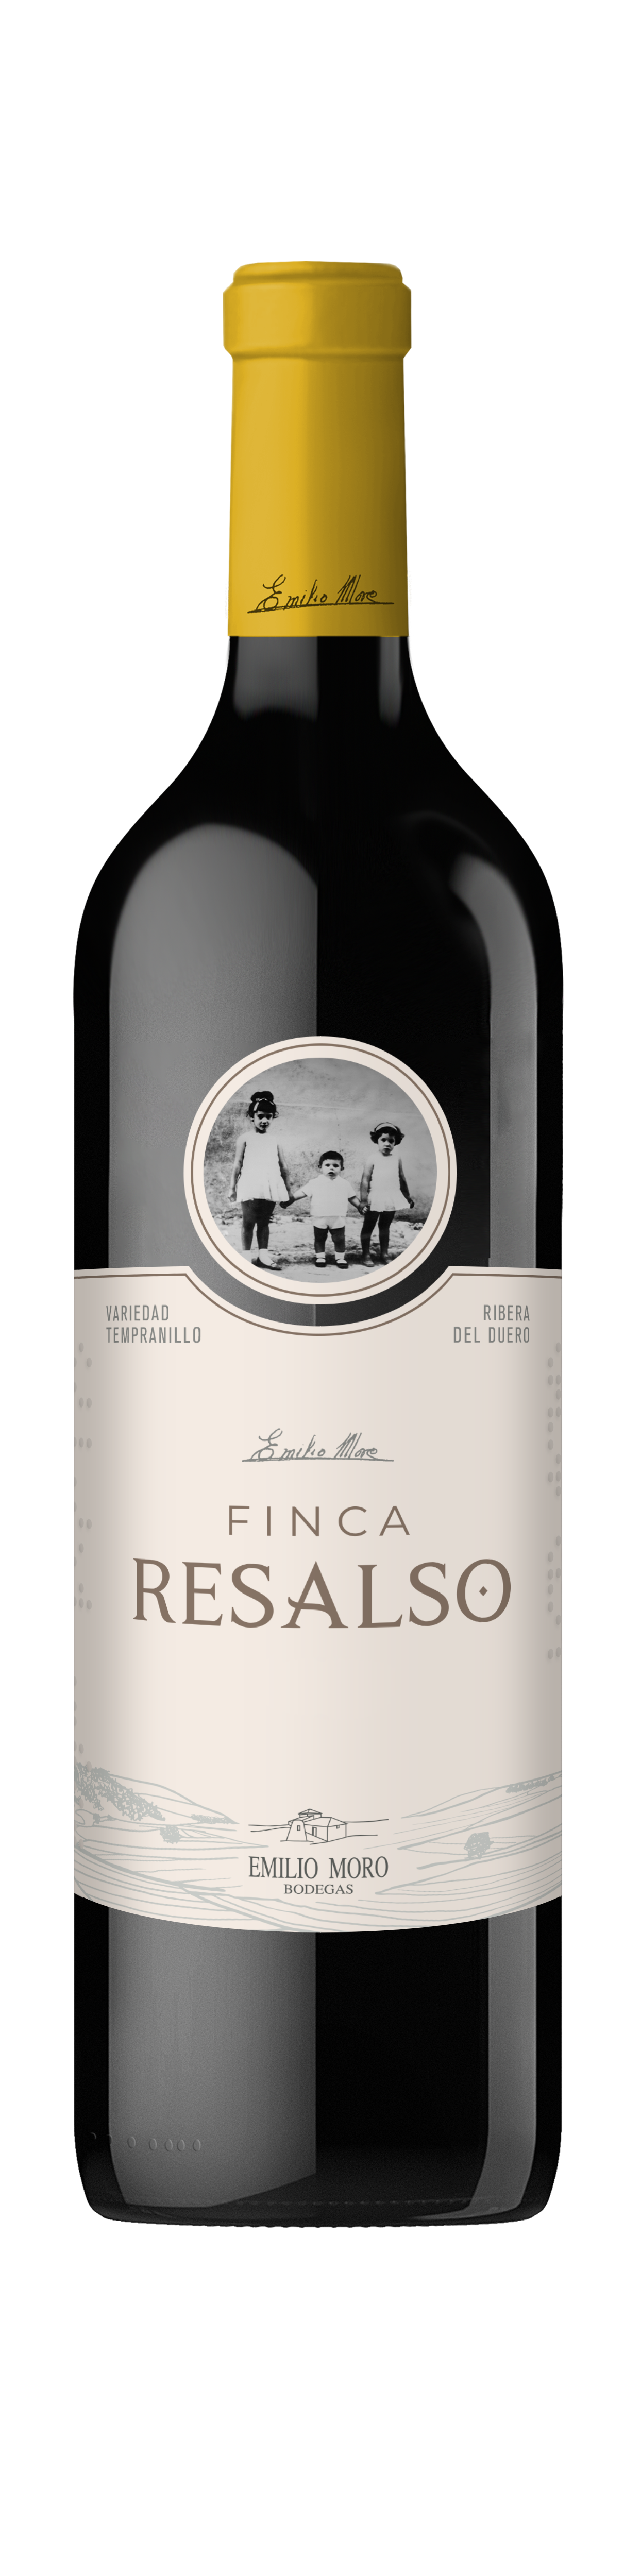 Bottle shot - Bodegas Emilio Moro, Finca Resalso, DO Ribera del Duero, Spain